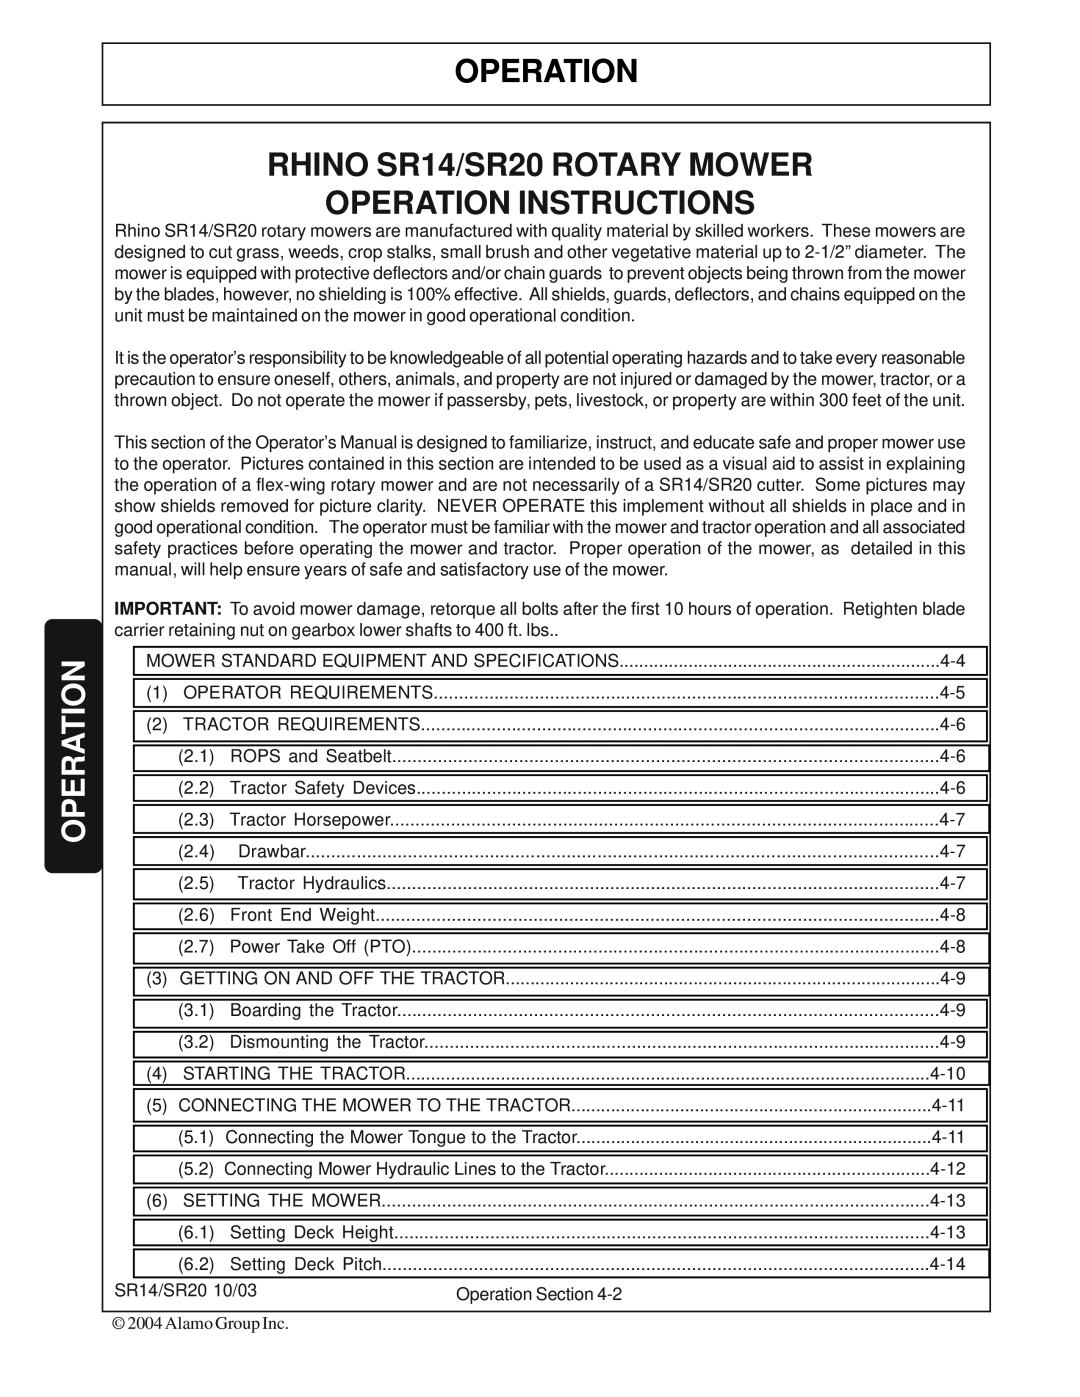 Alamo manual Operation, RHINO SR14/SR20 ROTARY MOWER OPERATION INSTRUCTIONS 